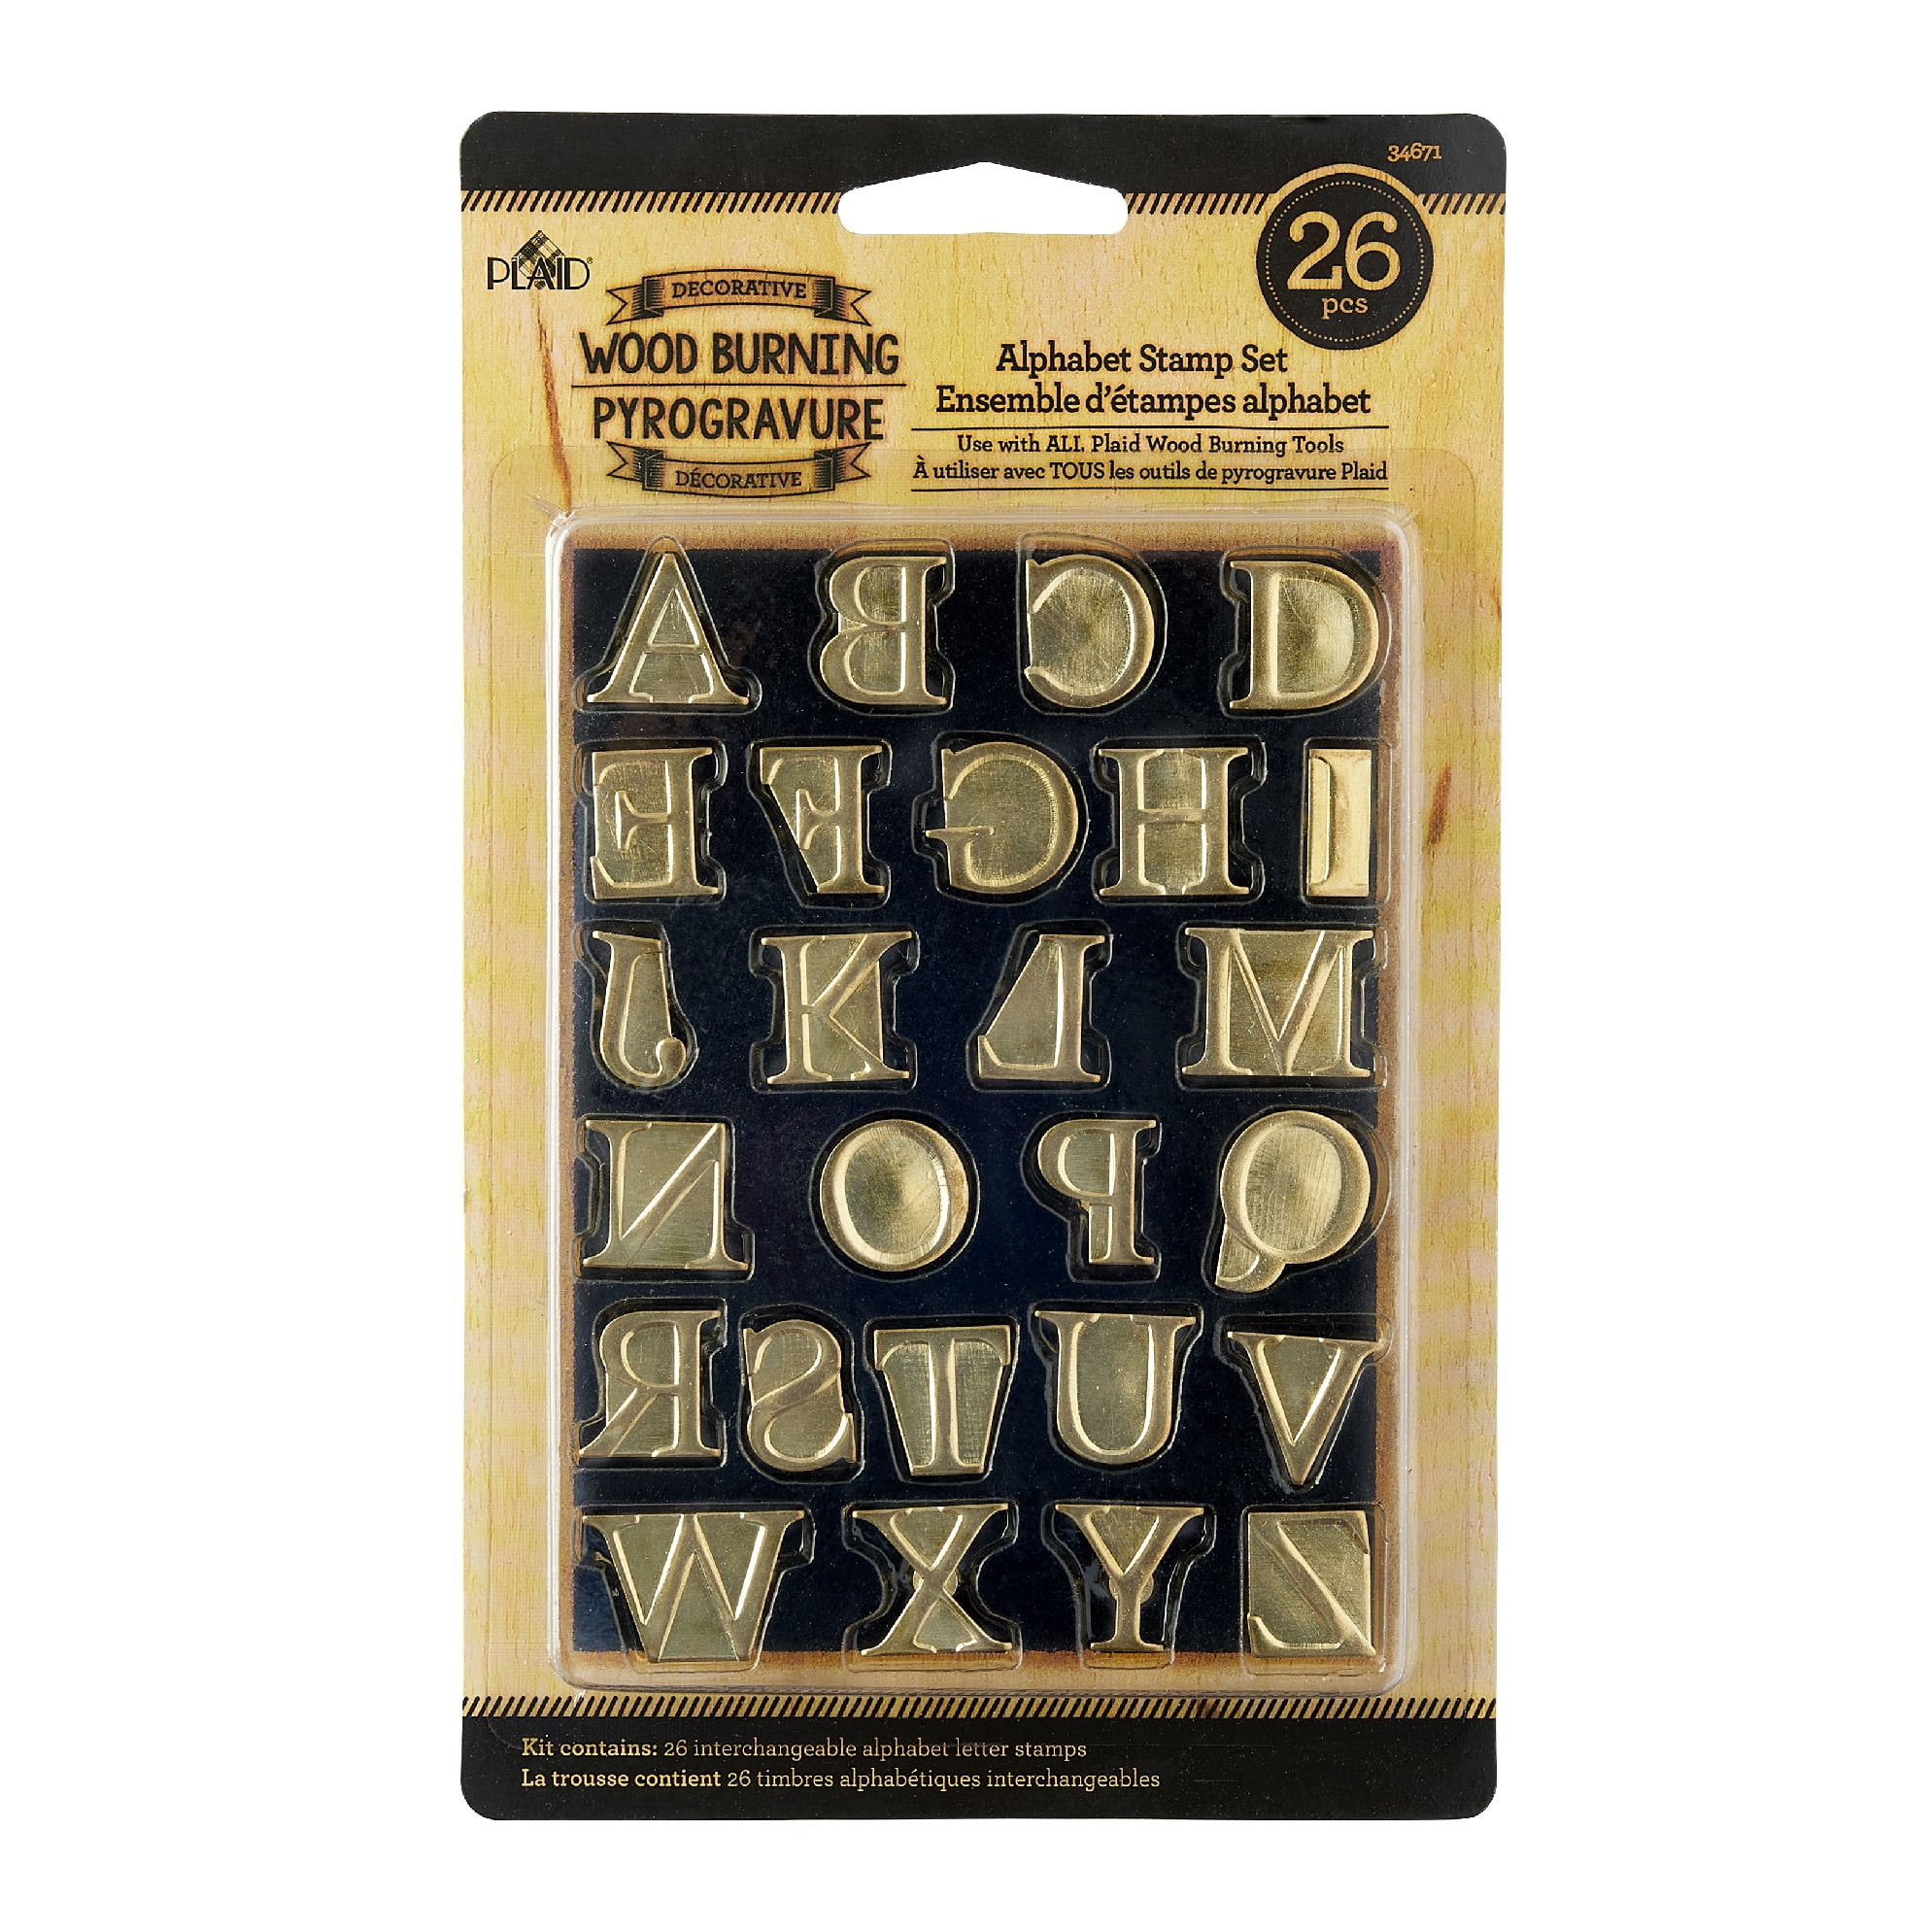 Wood Burning Pyrography Alphabet Letter Symbols Stamps Personalization Set Kit 